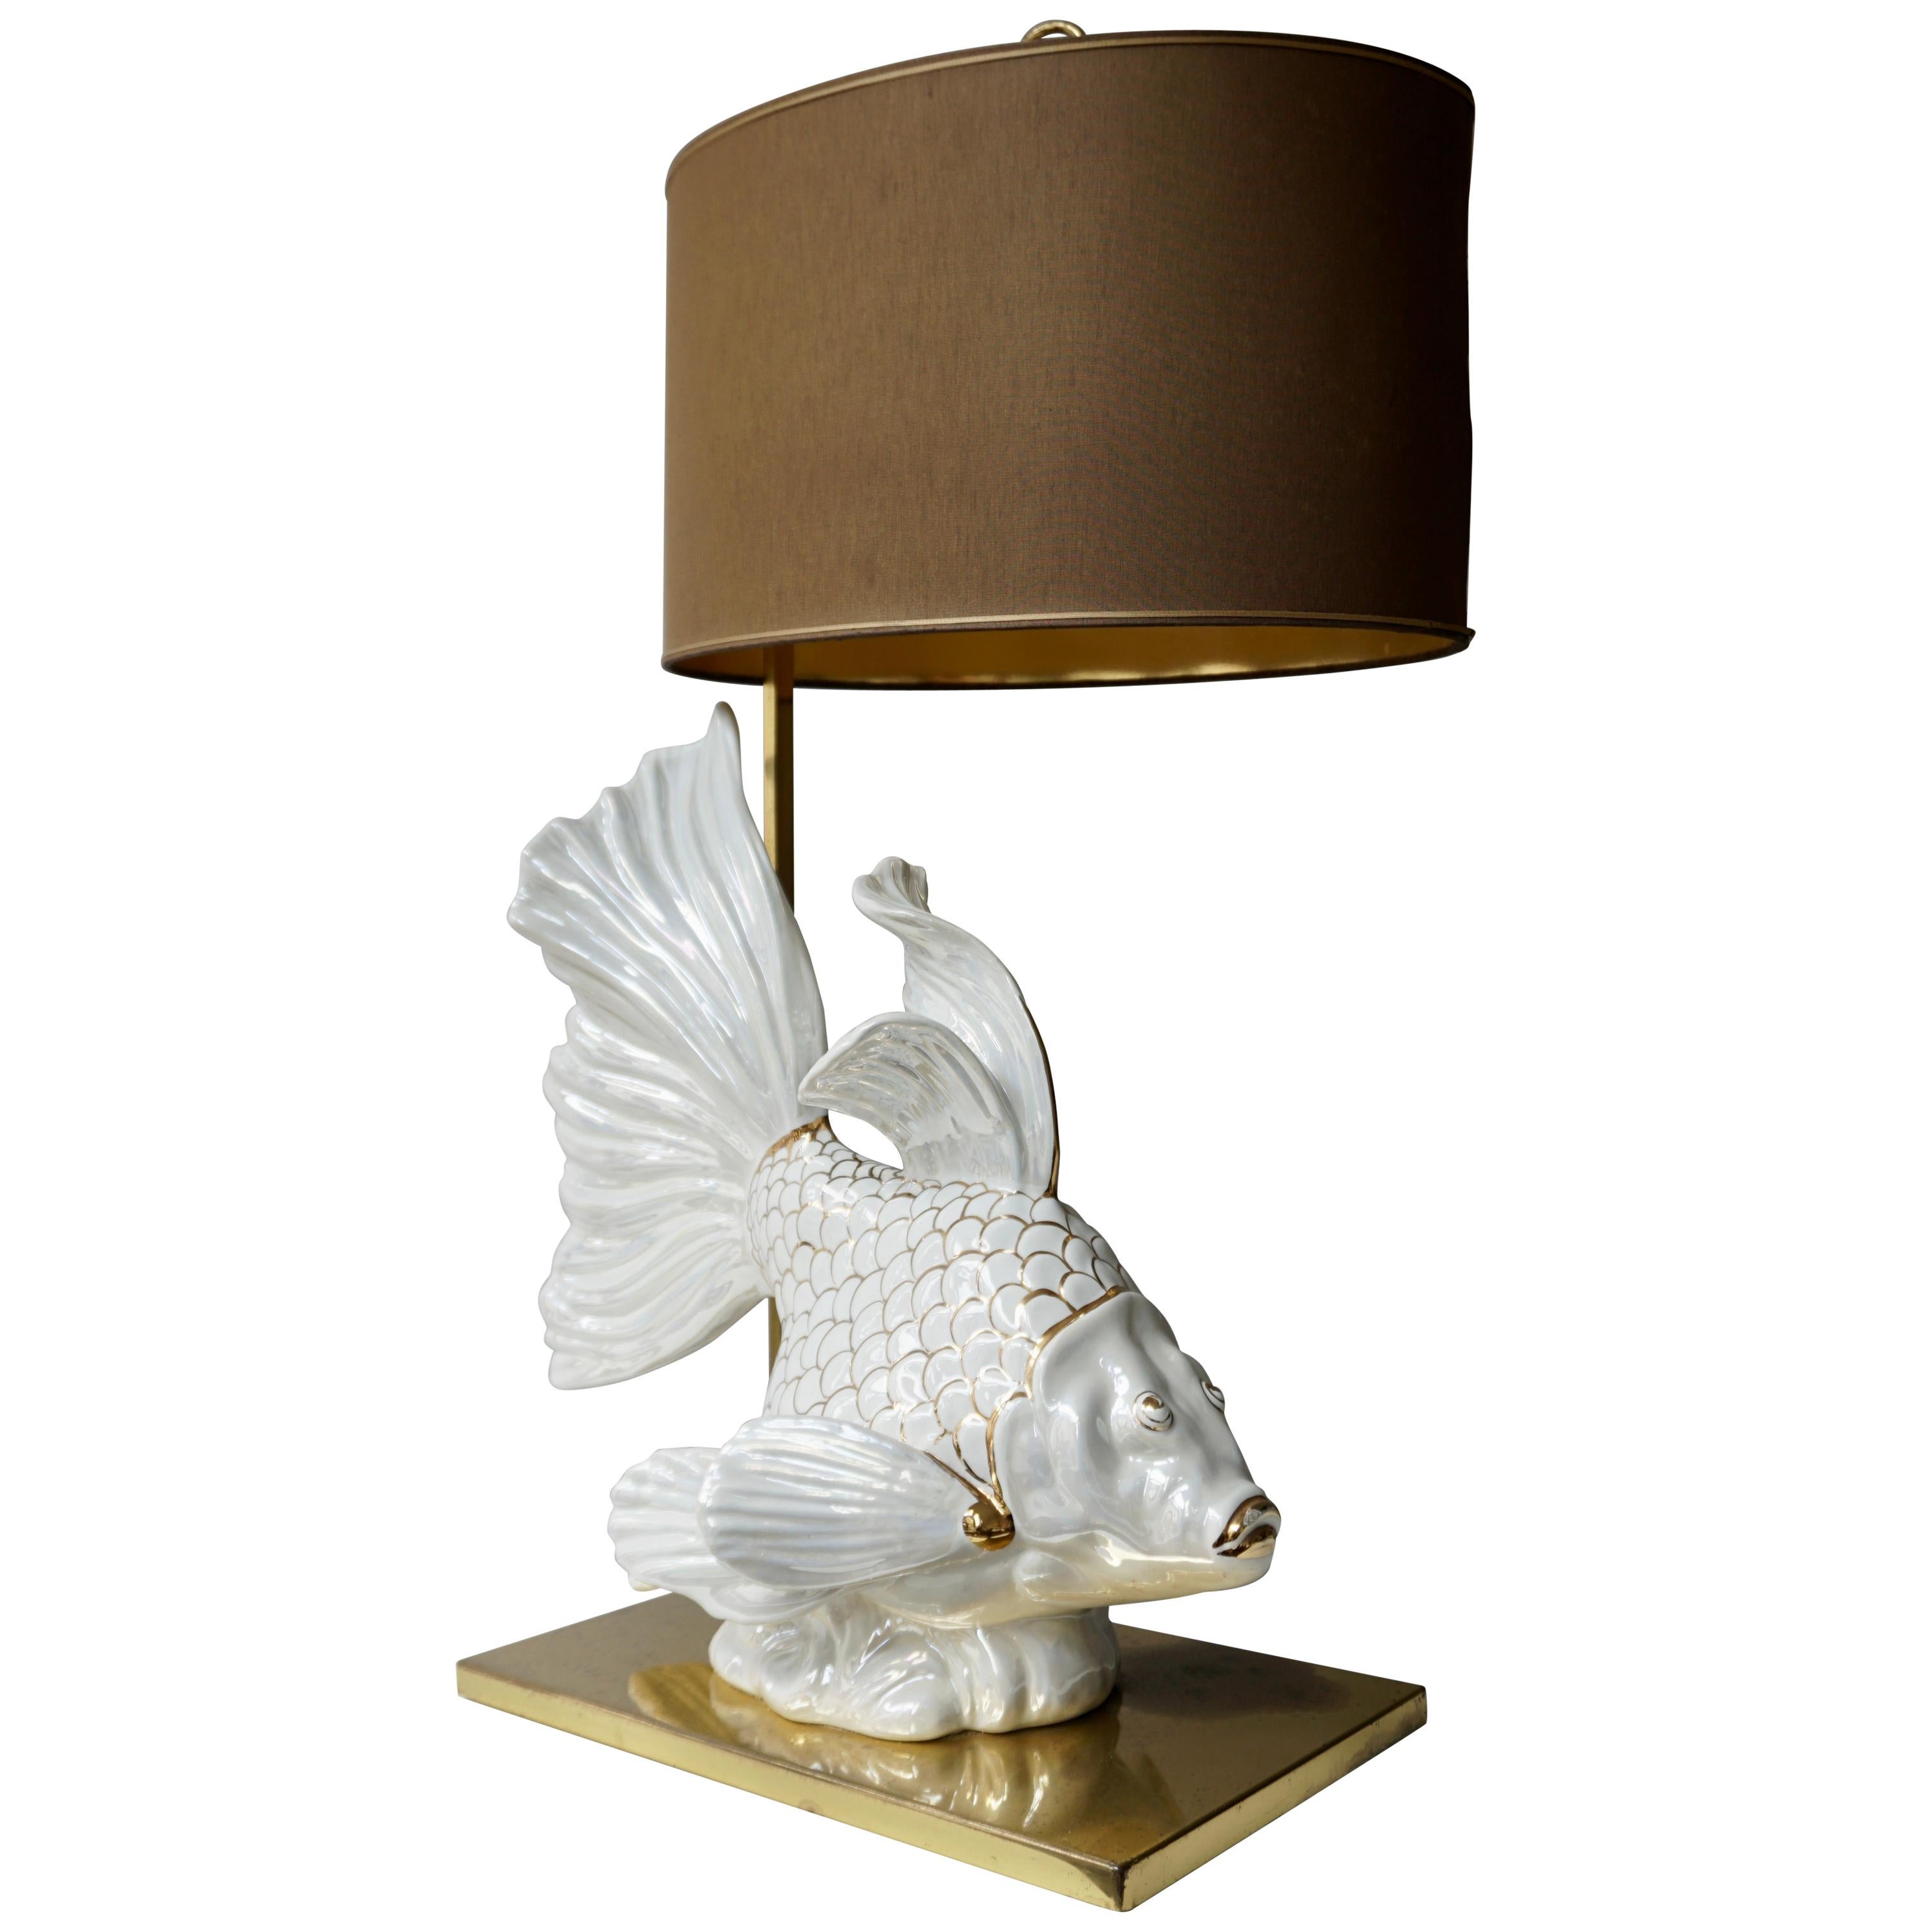 Italian Midcentury Big Ceramic Fish Lamp with Brass Details, 1970s